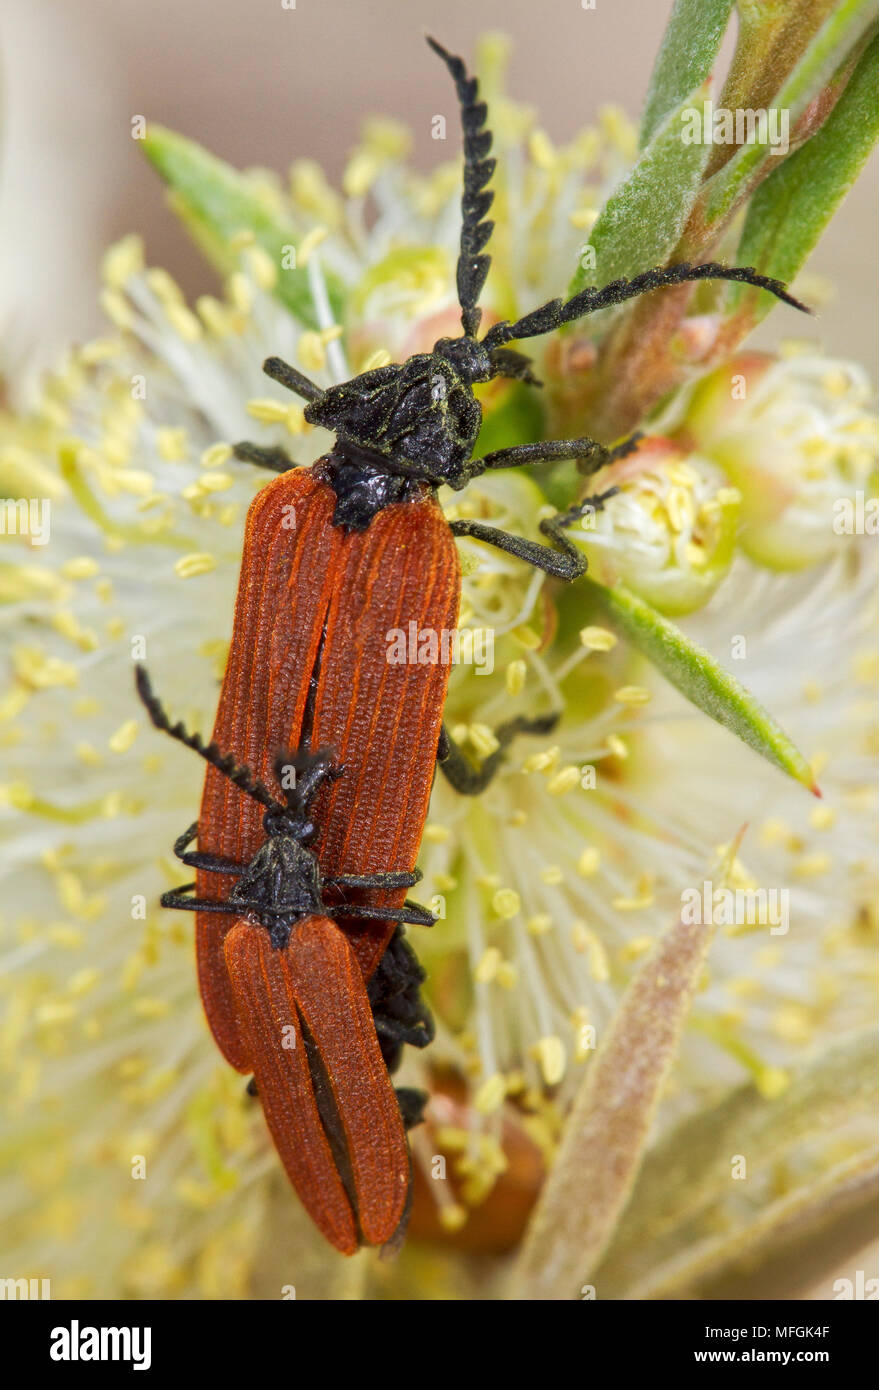 Net-Porrostoma rhipidium scarabée ailé ( ; Fam. Lycidae à ailes [Net] Coléoptères), paire amting, Oxley Wild River National Park, New South Wales, Australia Banque D'Images